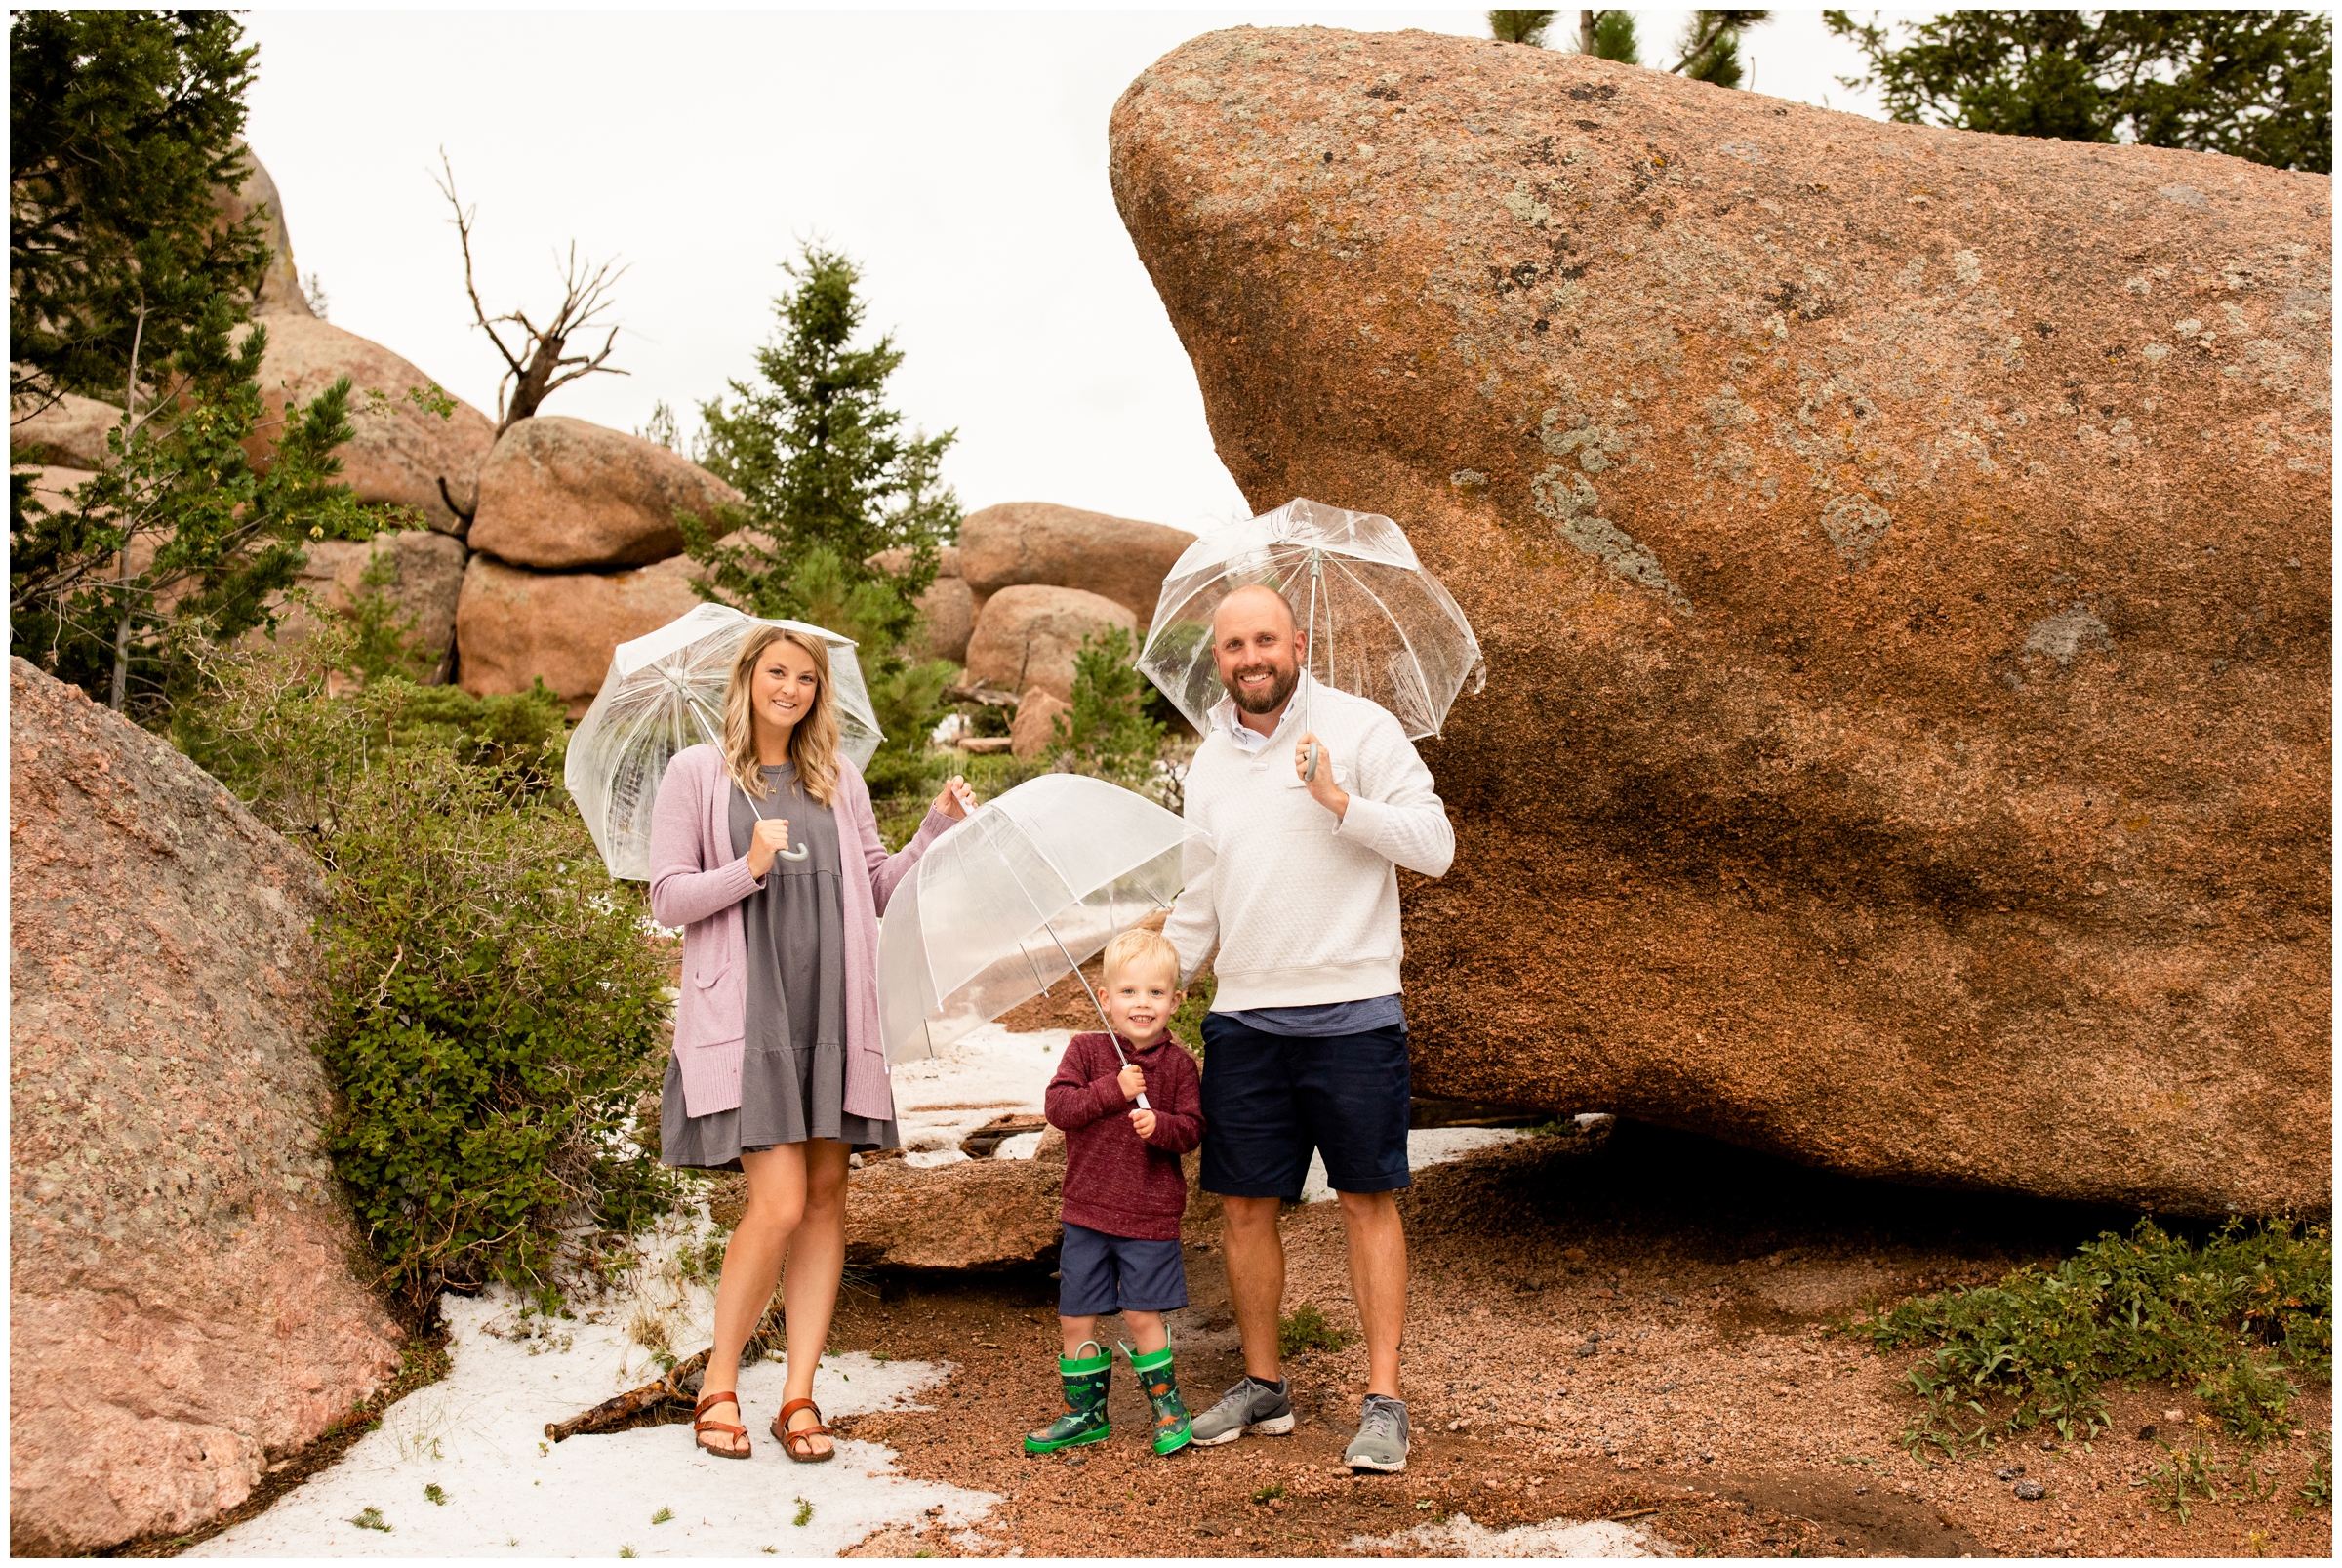 rainy family photography inspiration in Laramie Wyoming by Plum Pretty photos